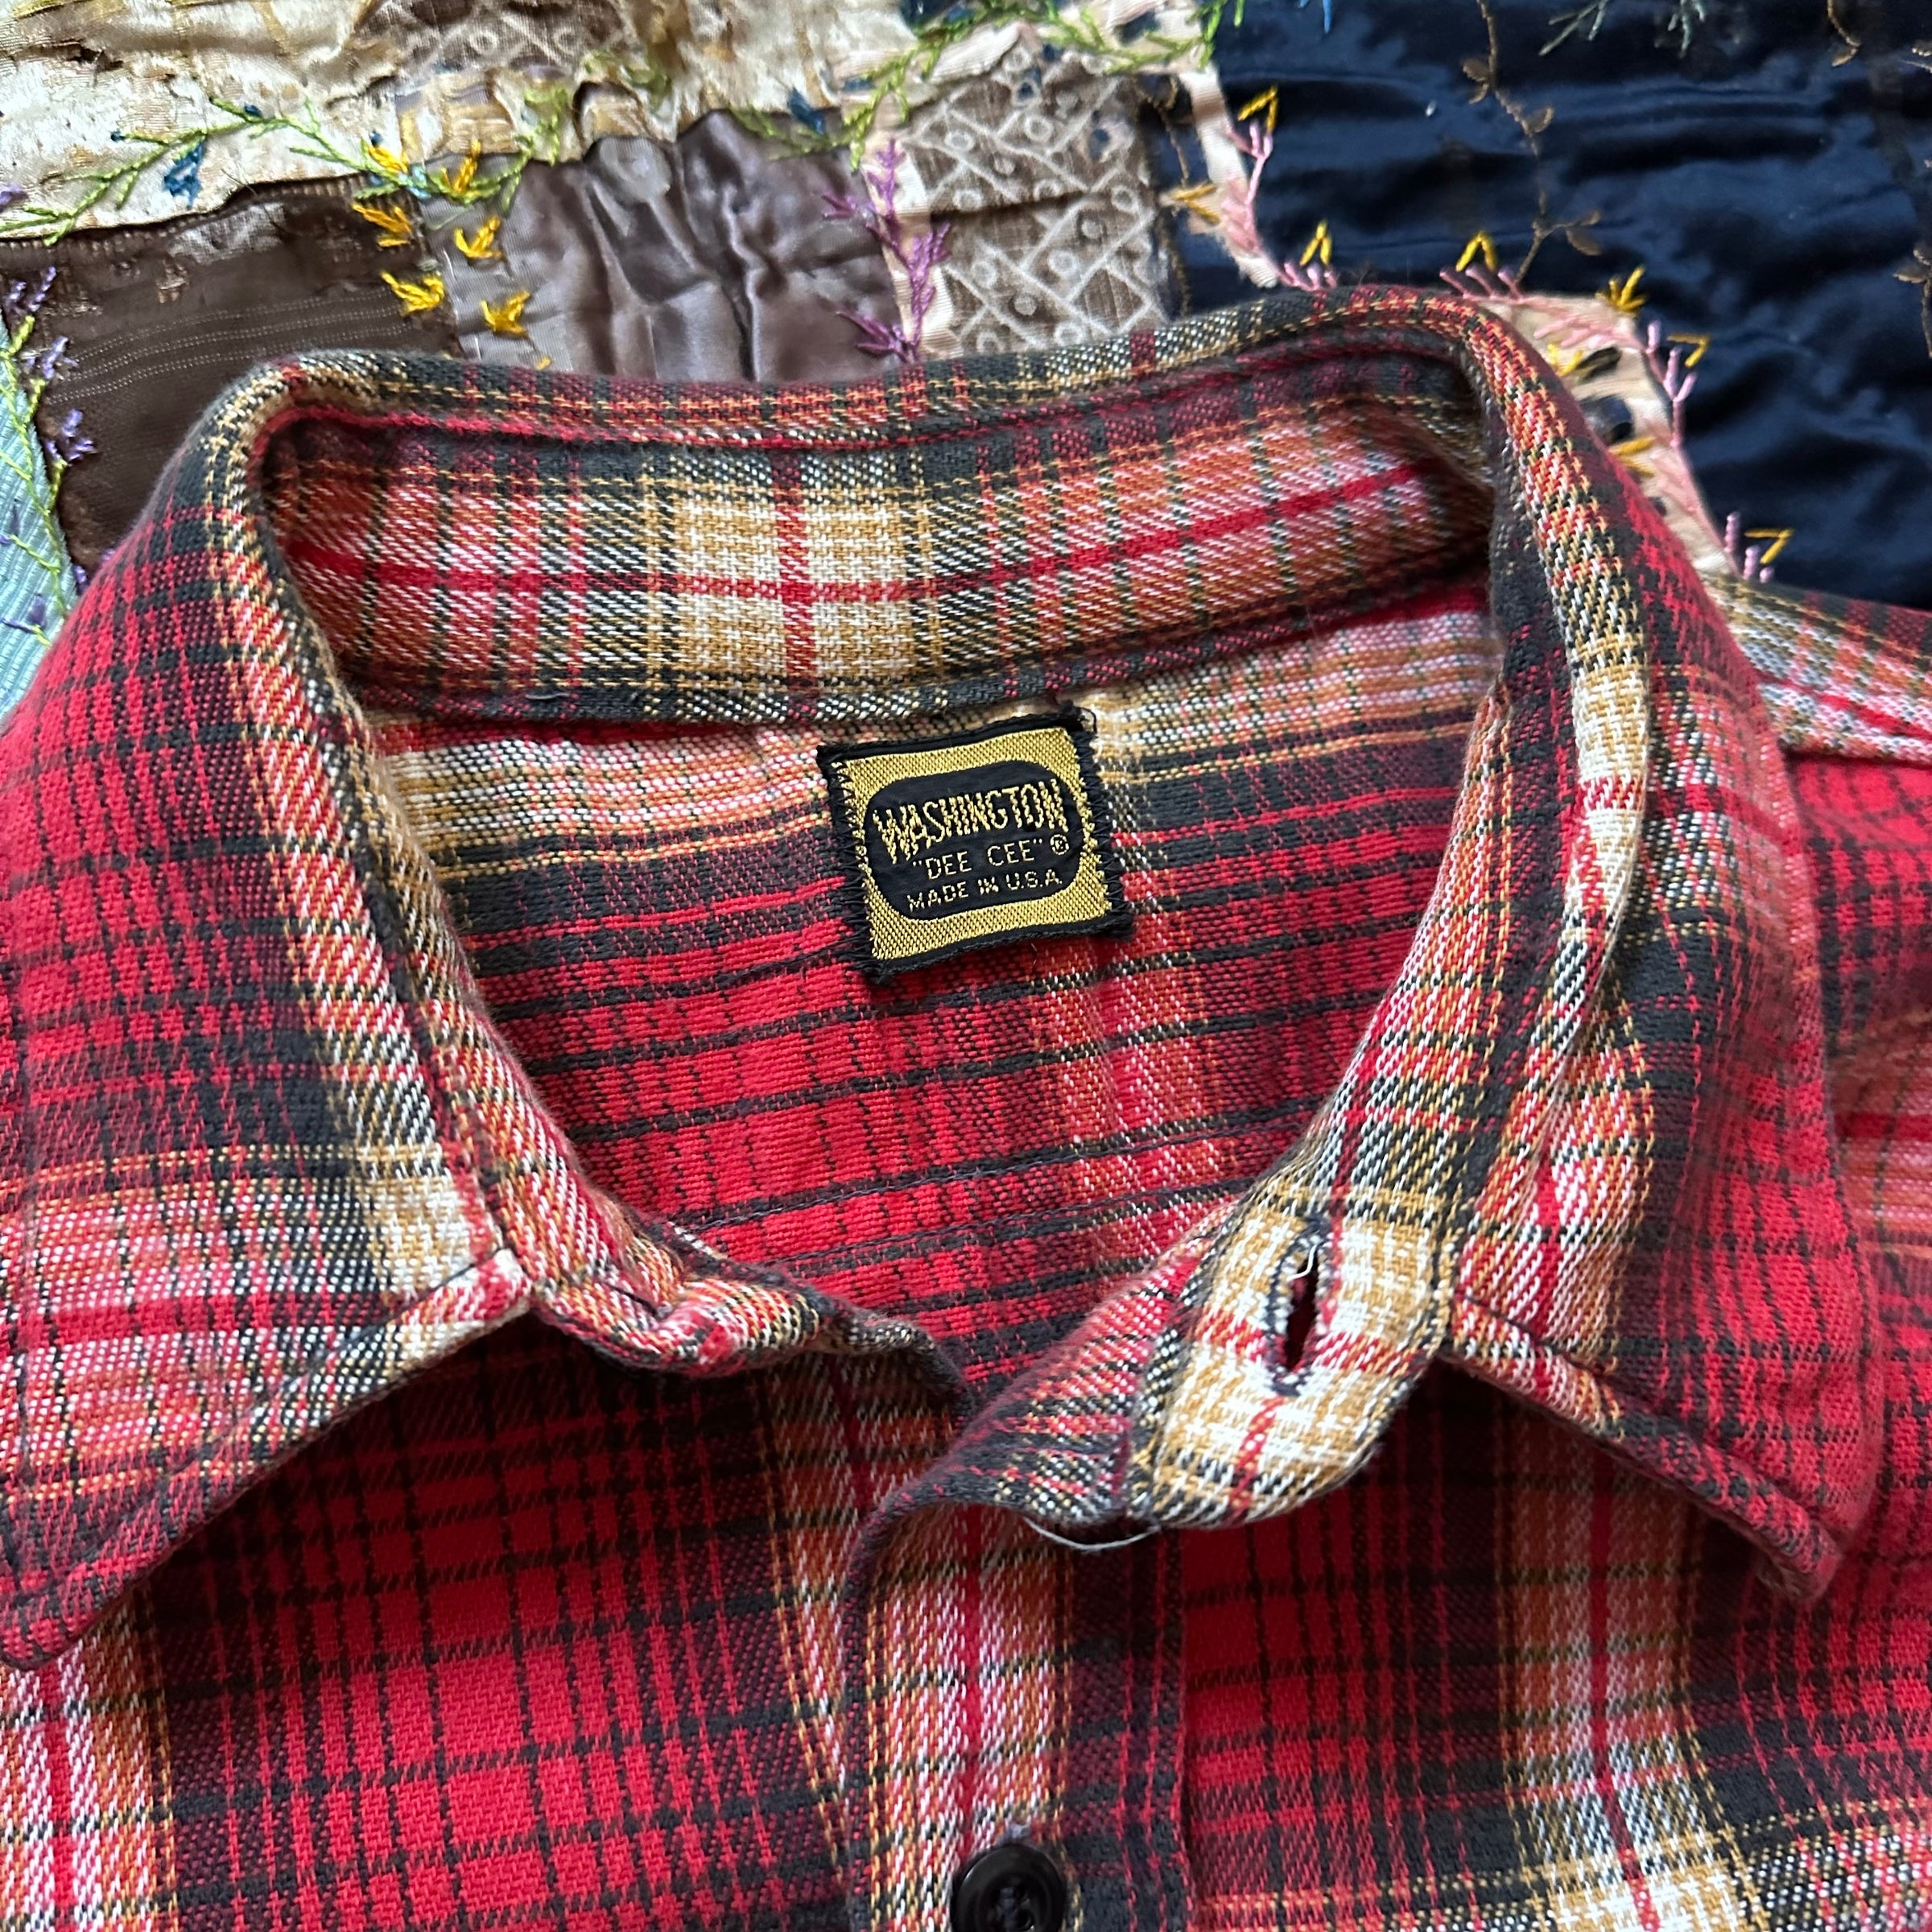 1950’s Washington Dee Cee Plaid Cotton Flannel Shirt 23.5" Chest